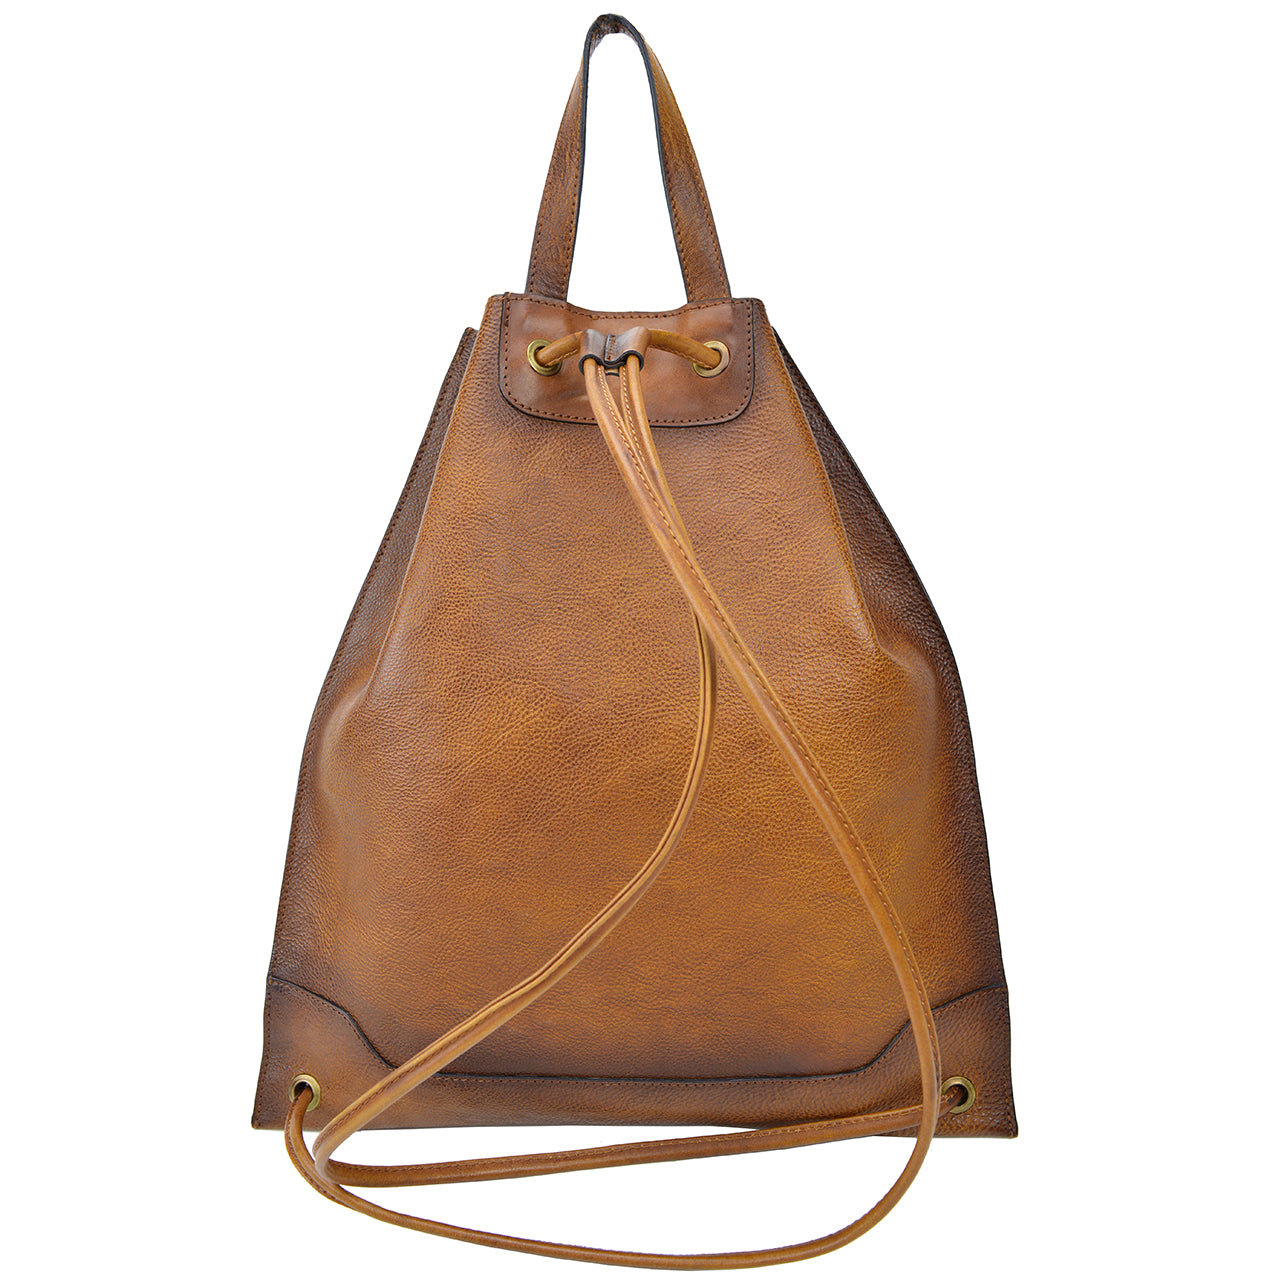 Pratesi Contea B490 Backpack in genuine Italian leather